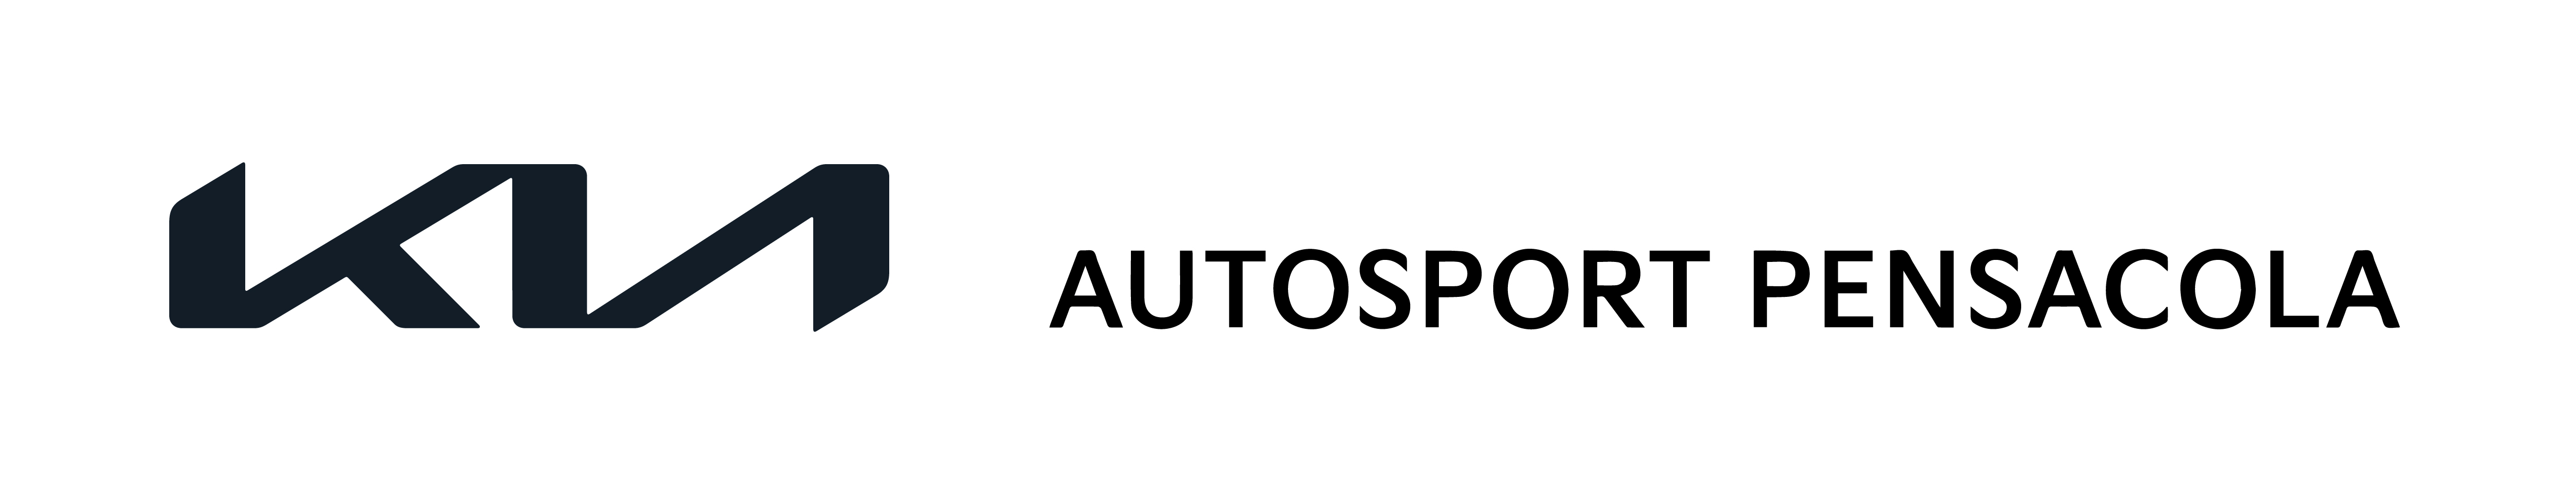 AutoSport_HOR-01.jpg